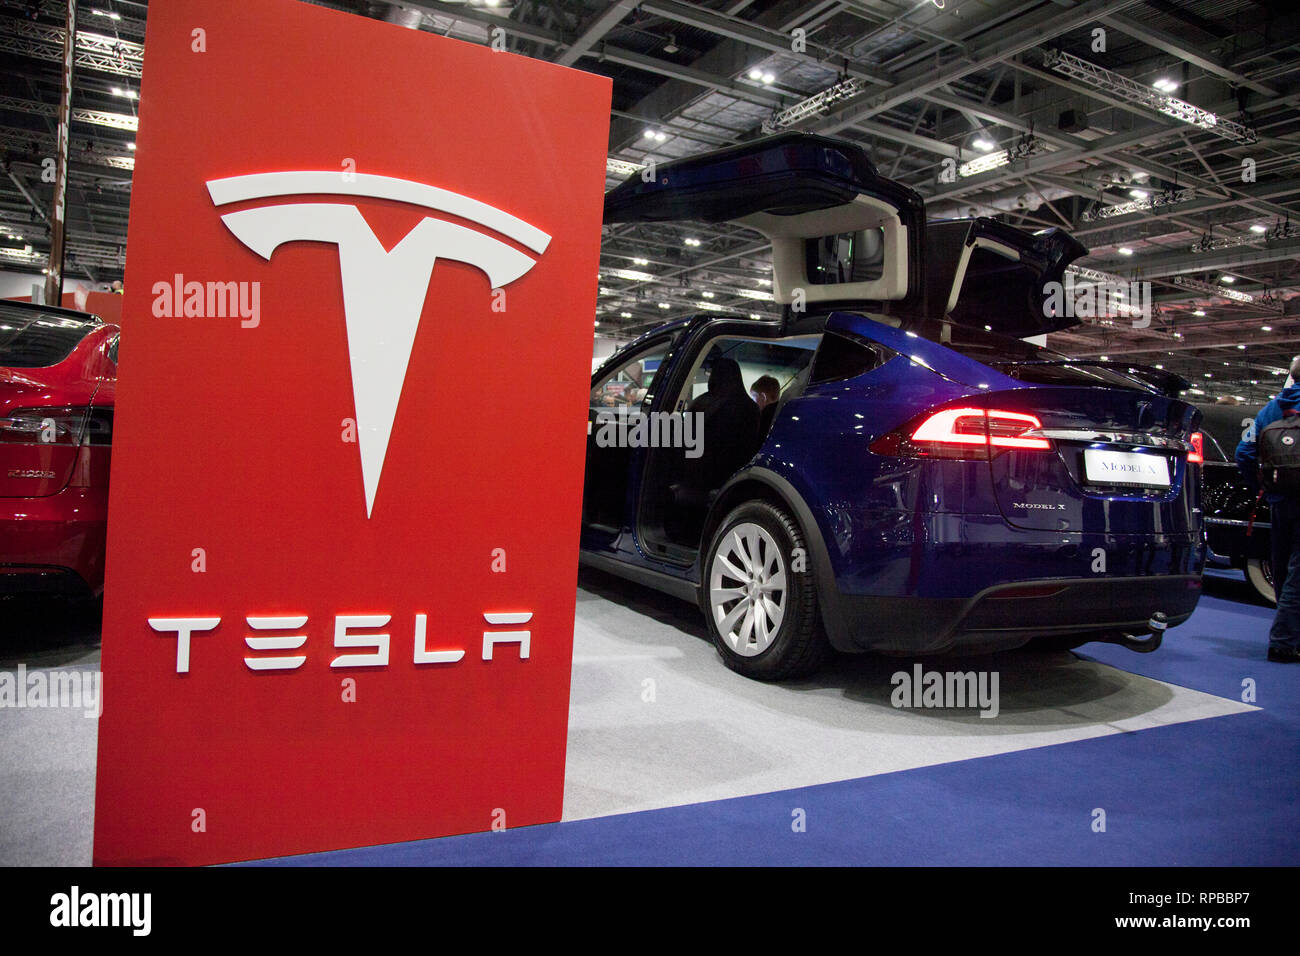 LONDON, UK, 15. Februar 2019: Tesla Automarke auf der Classic Car Show Stockfoto